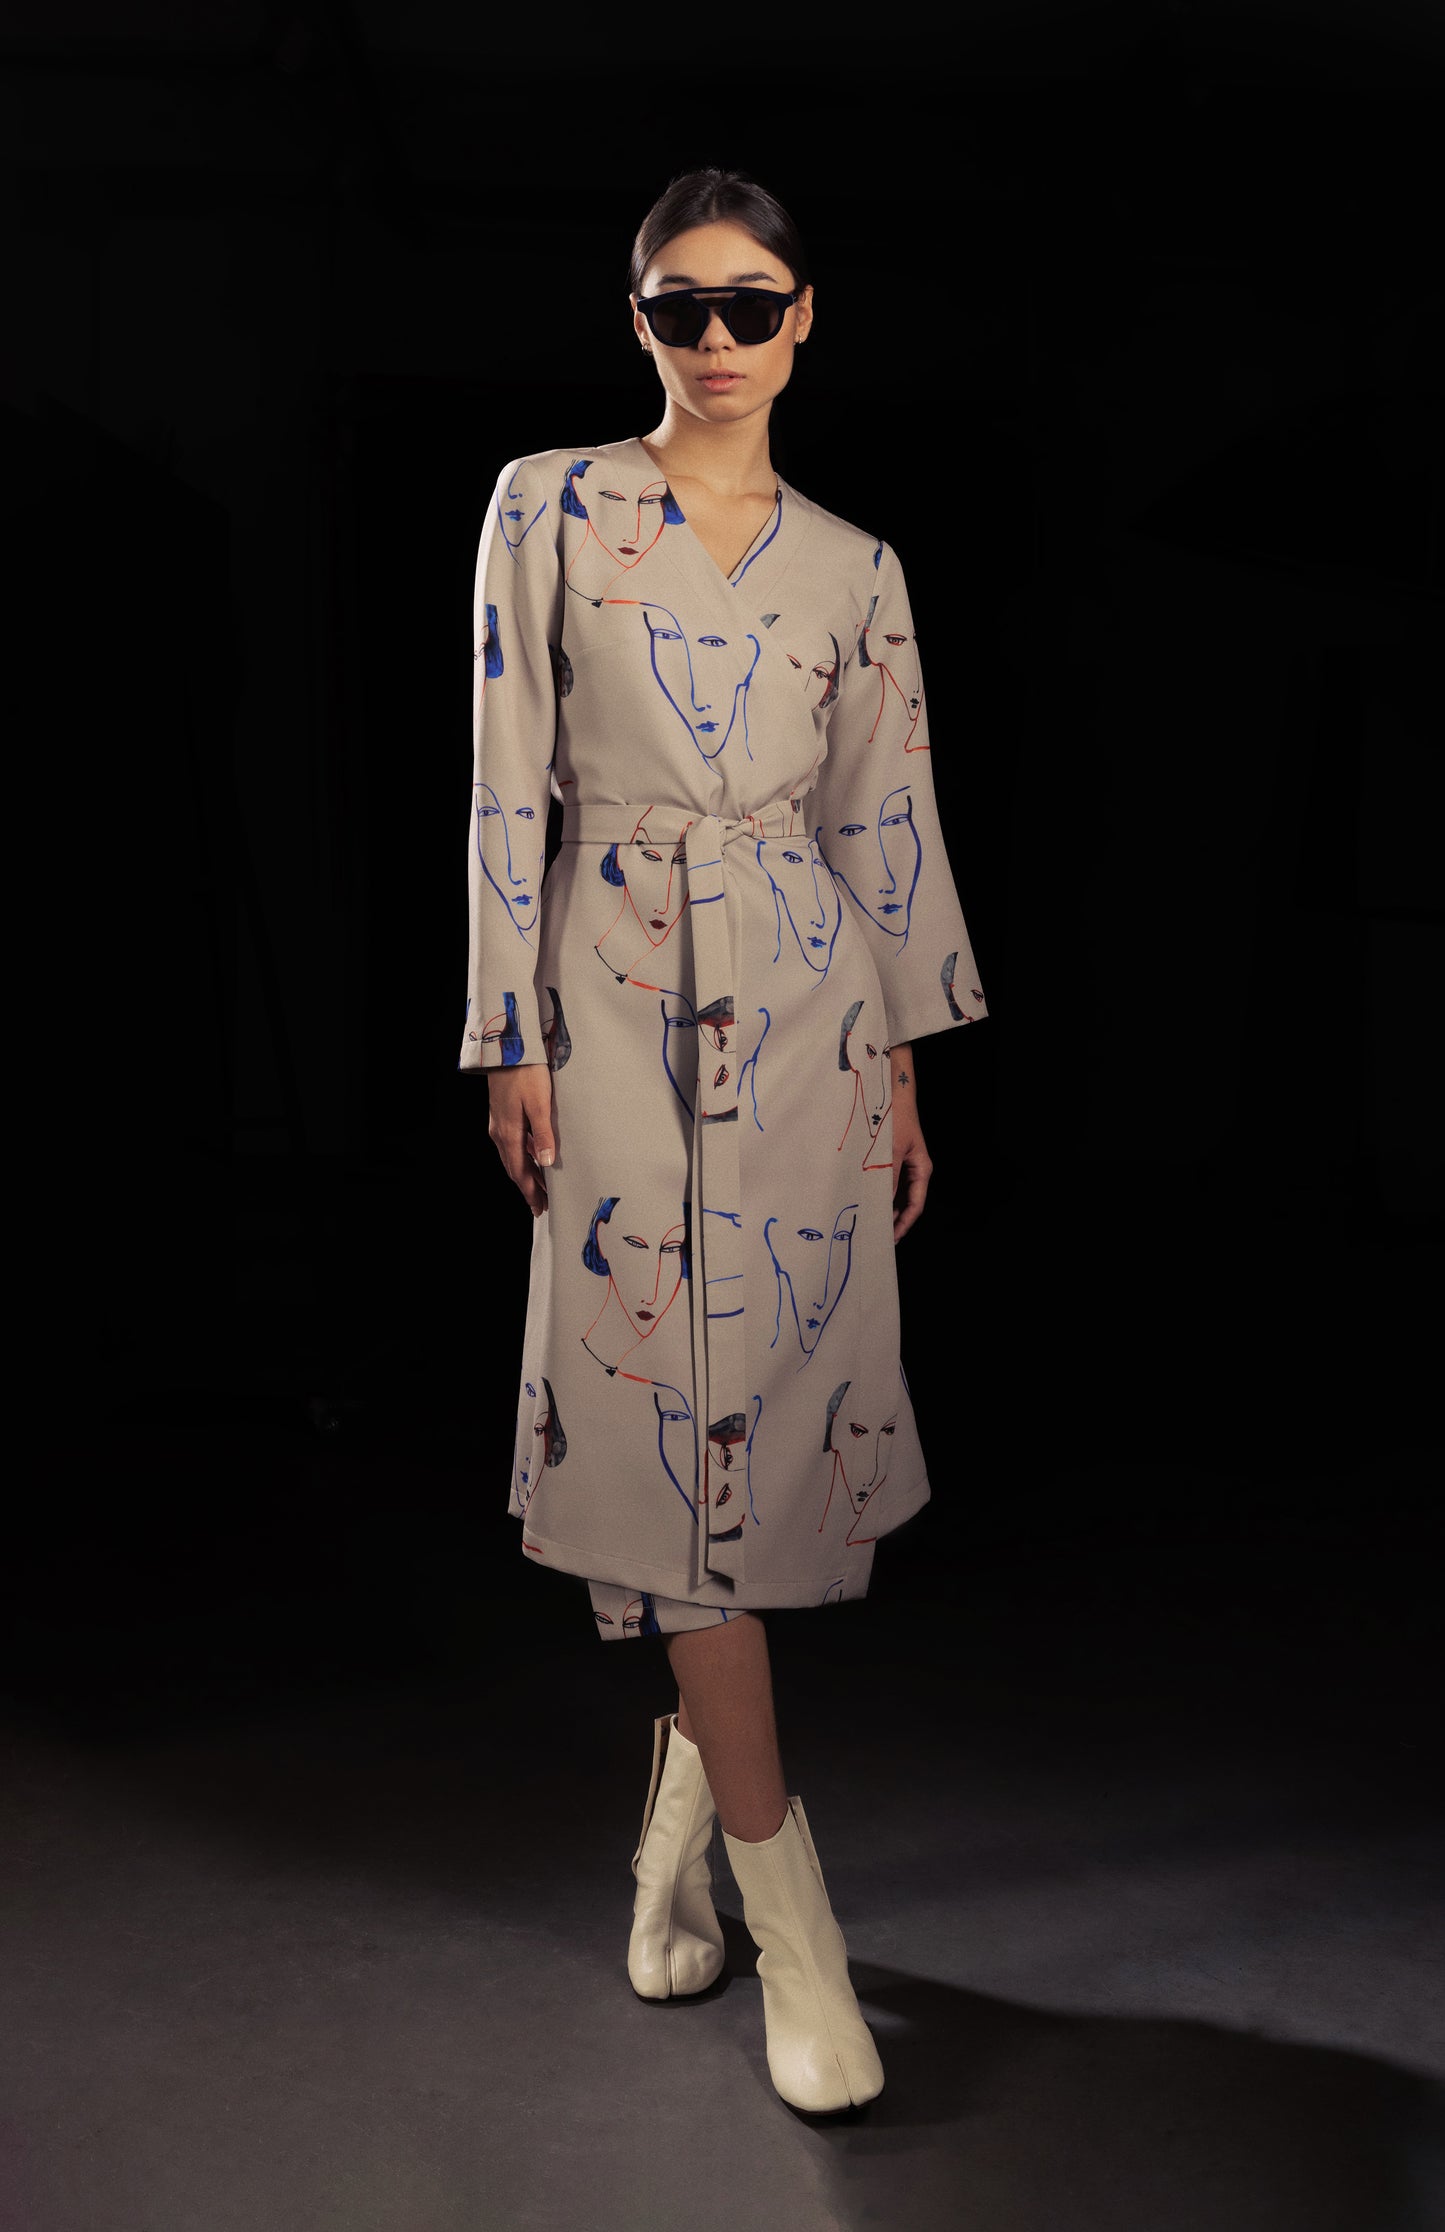 Fashion Asymmetrical Beige Dress With Faces Print